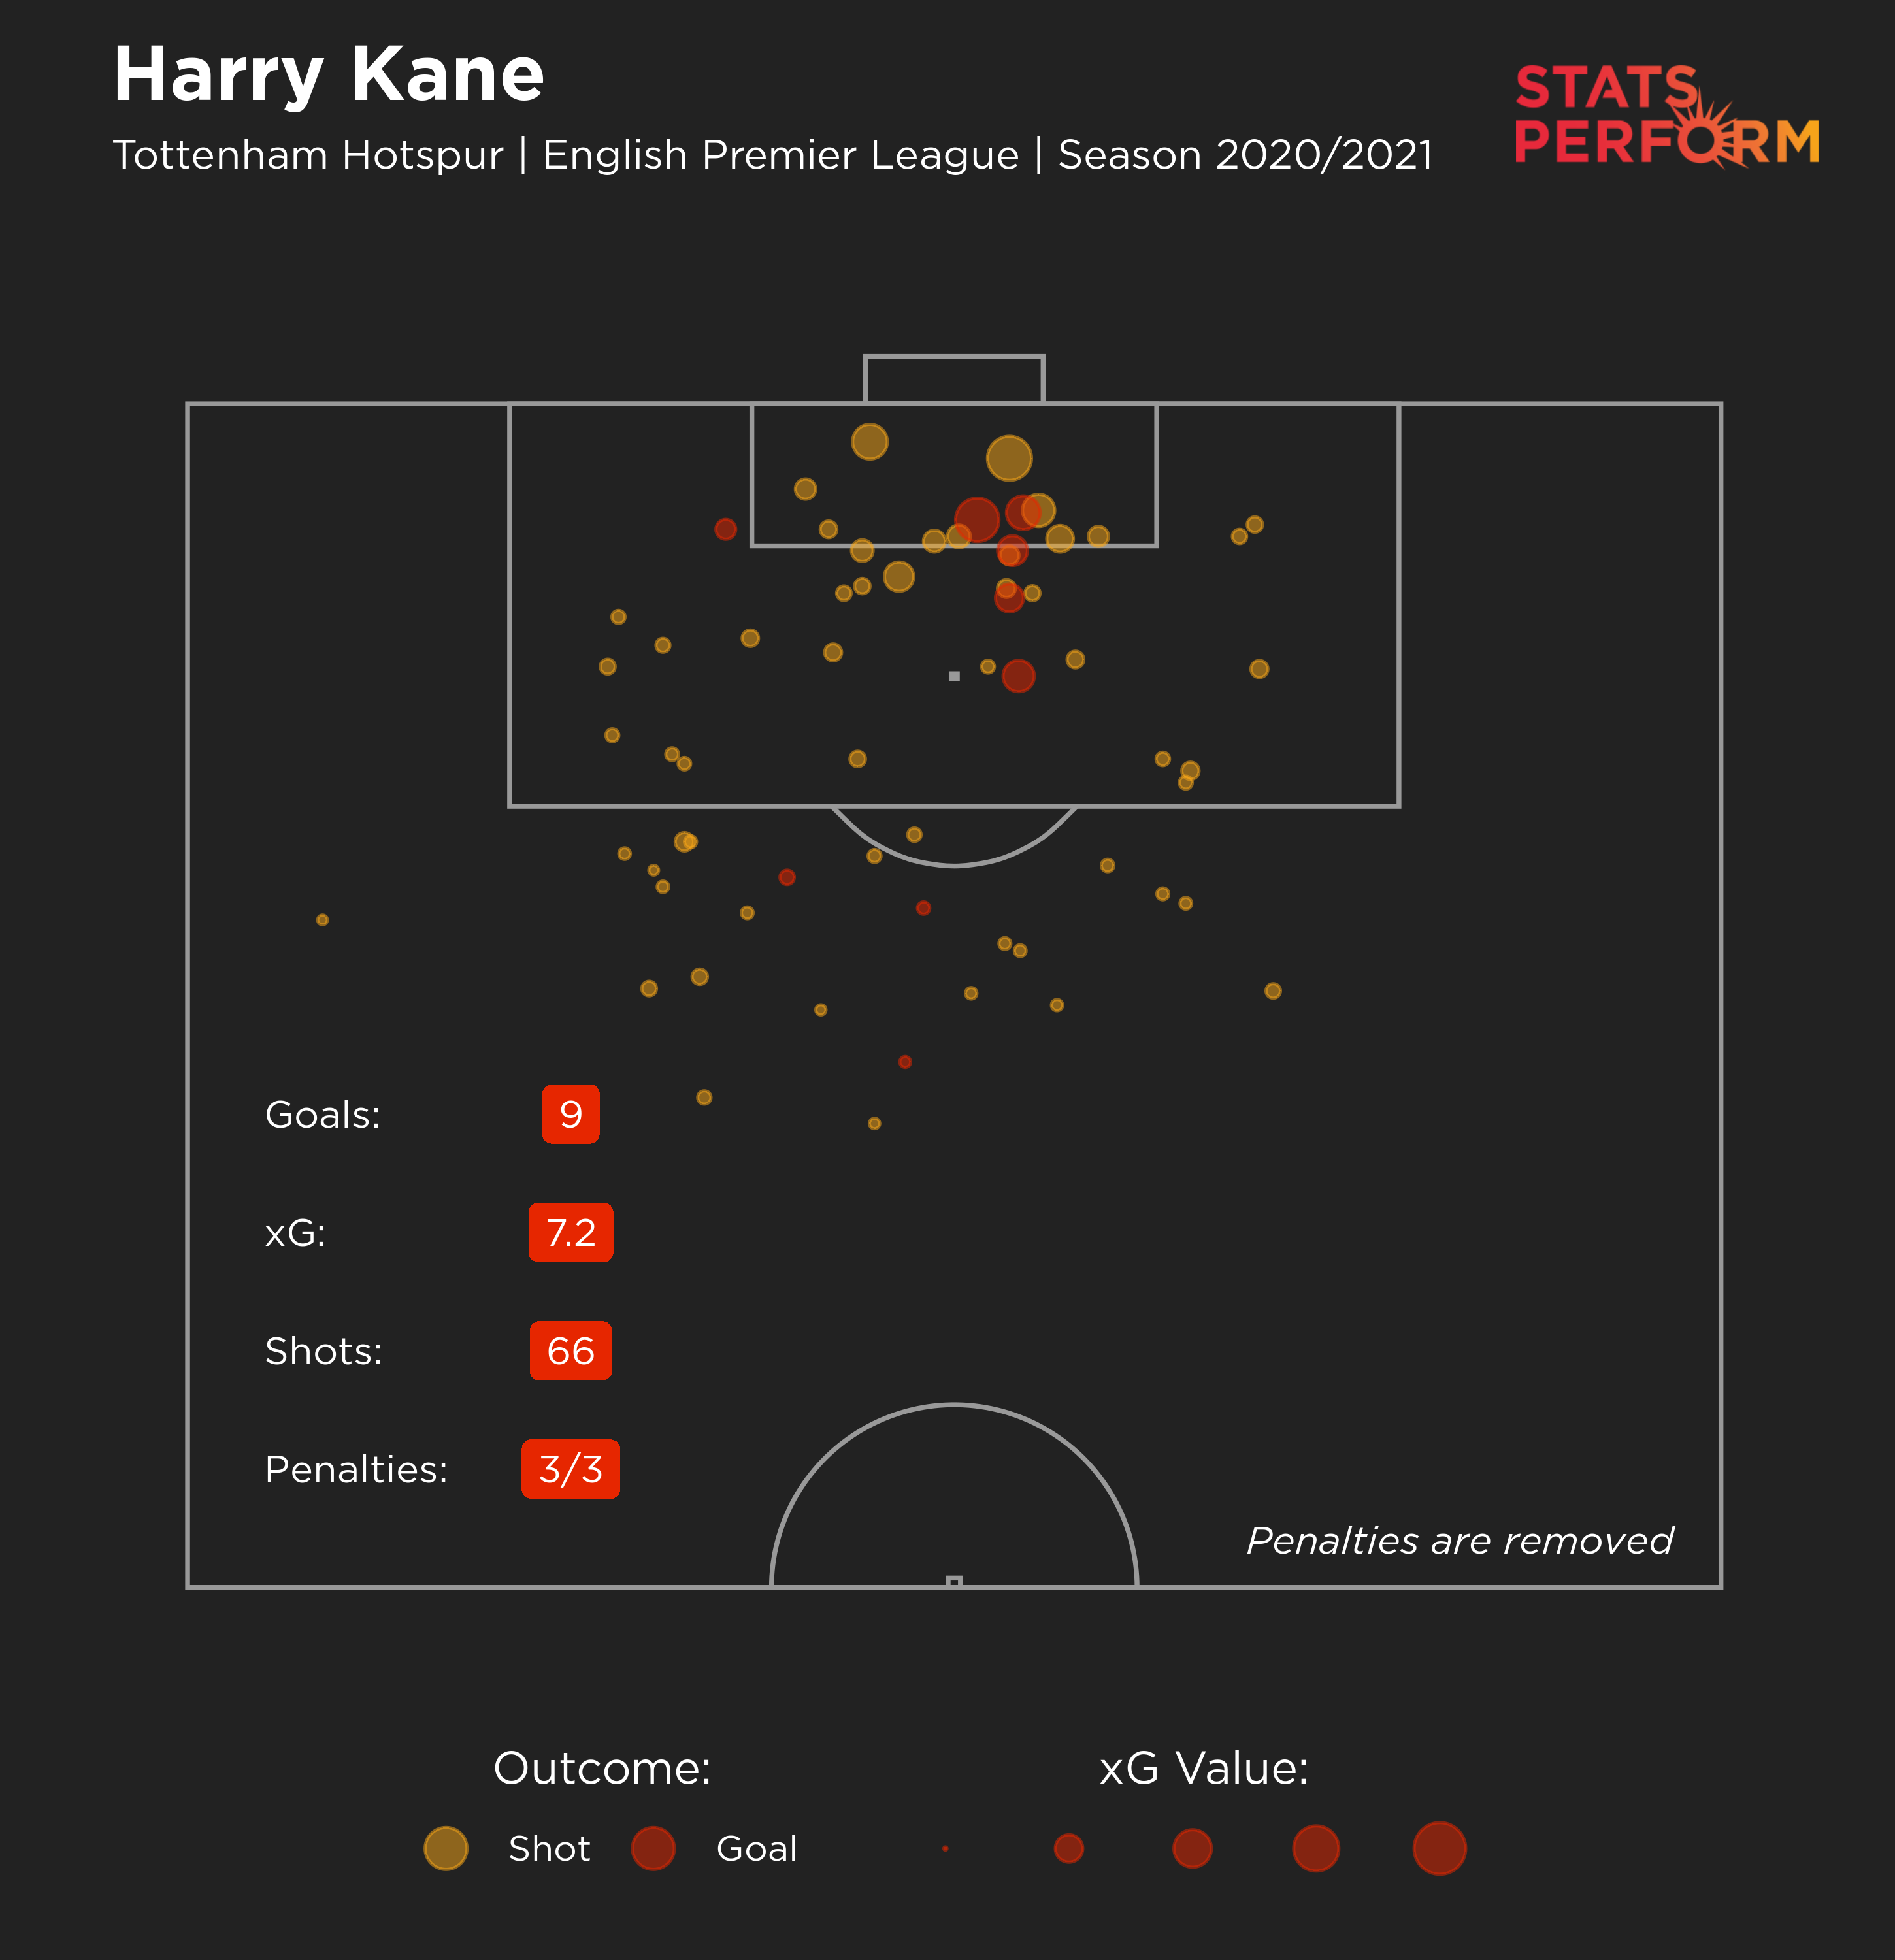 Harry Kane's Premier League xG this season